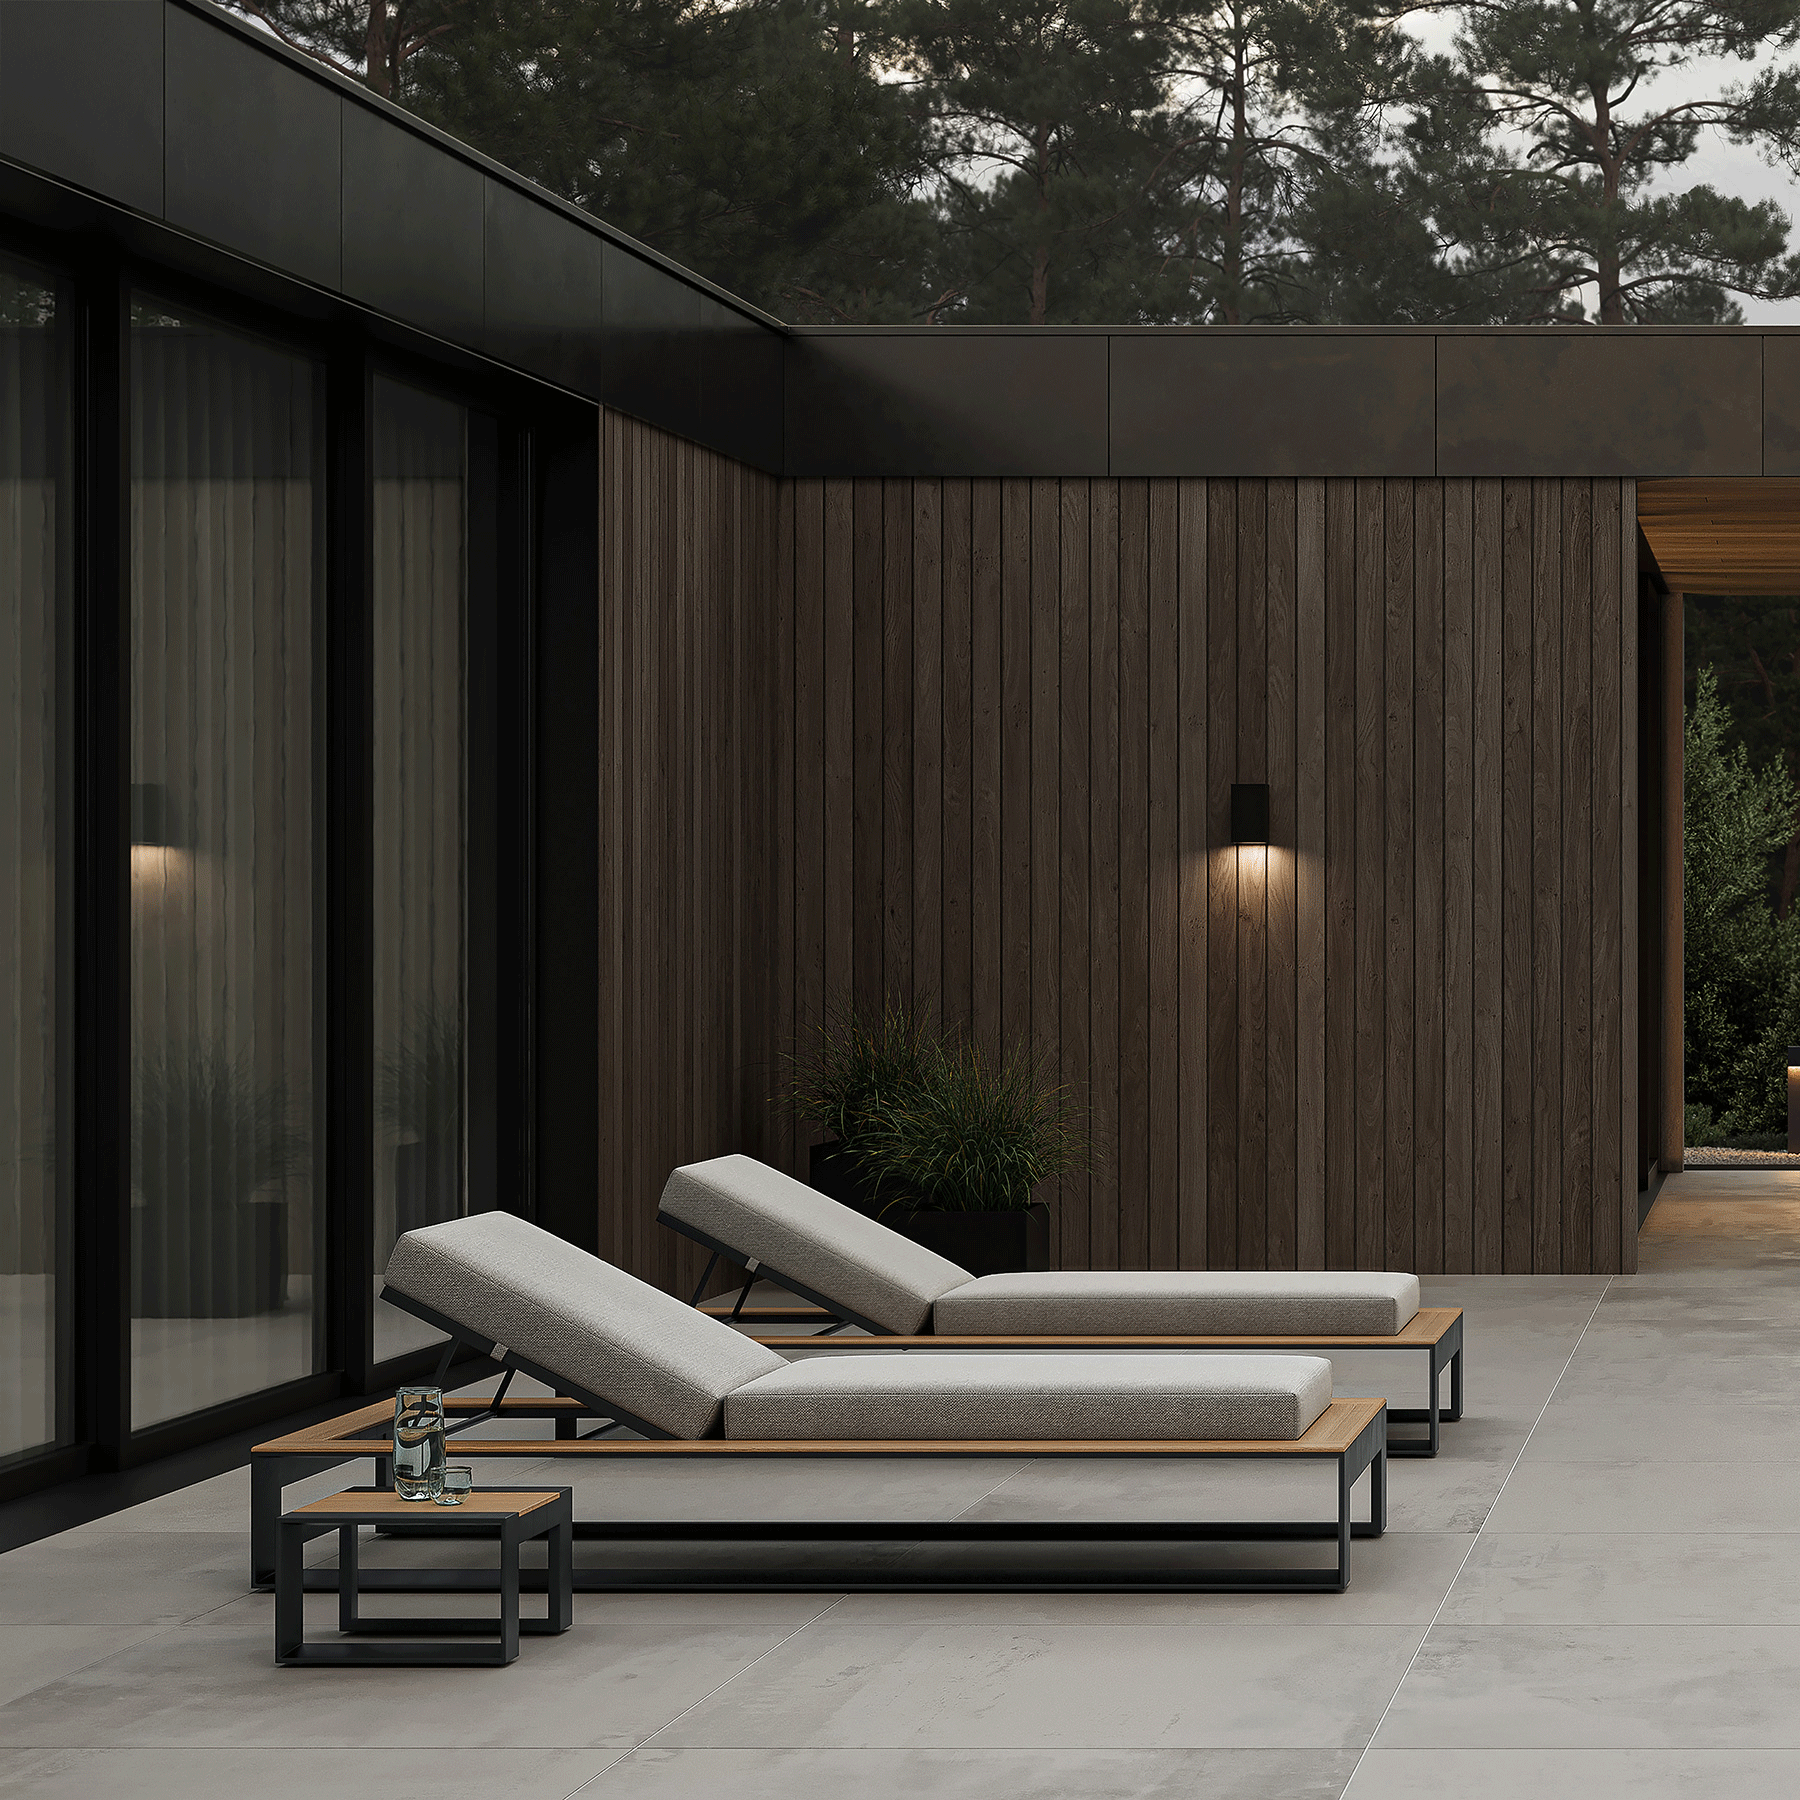 N5 sun lounger black powder-coated aluminium frame with teak detail lifestyle imagine